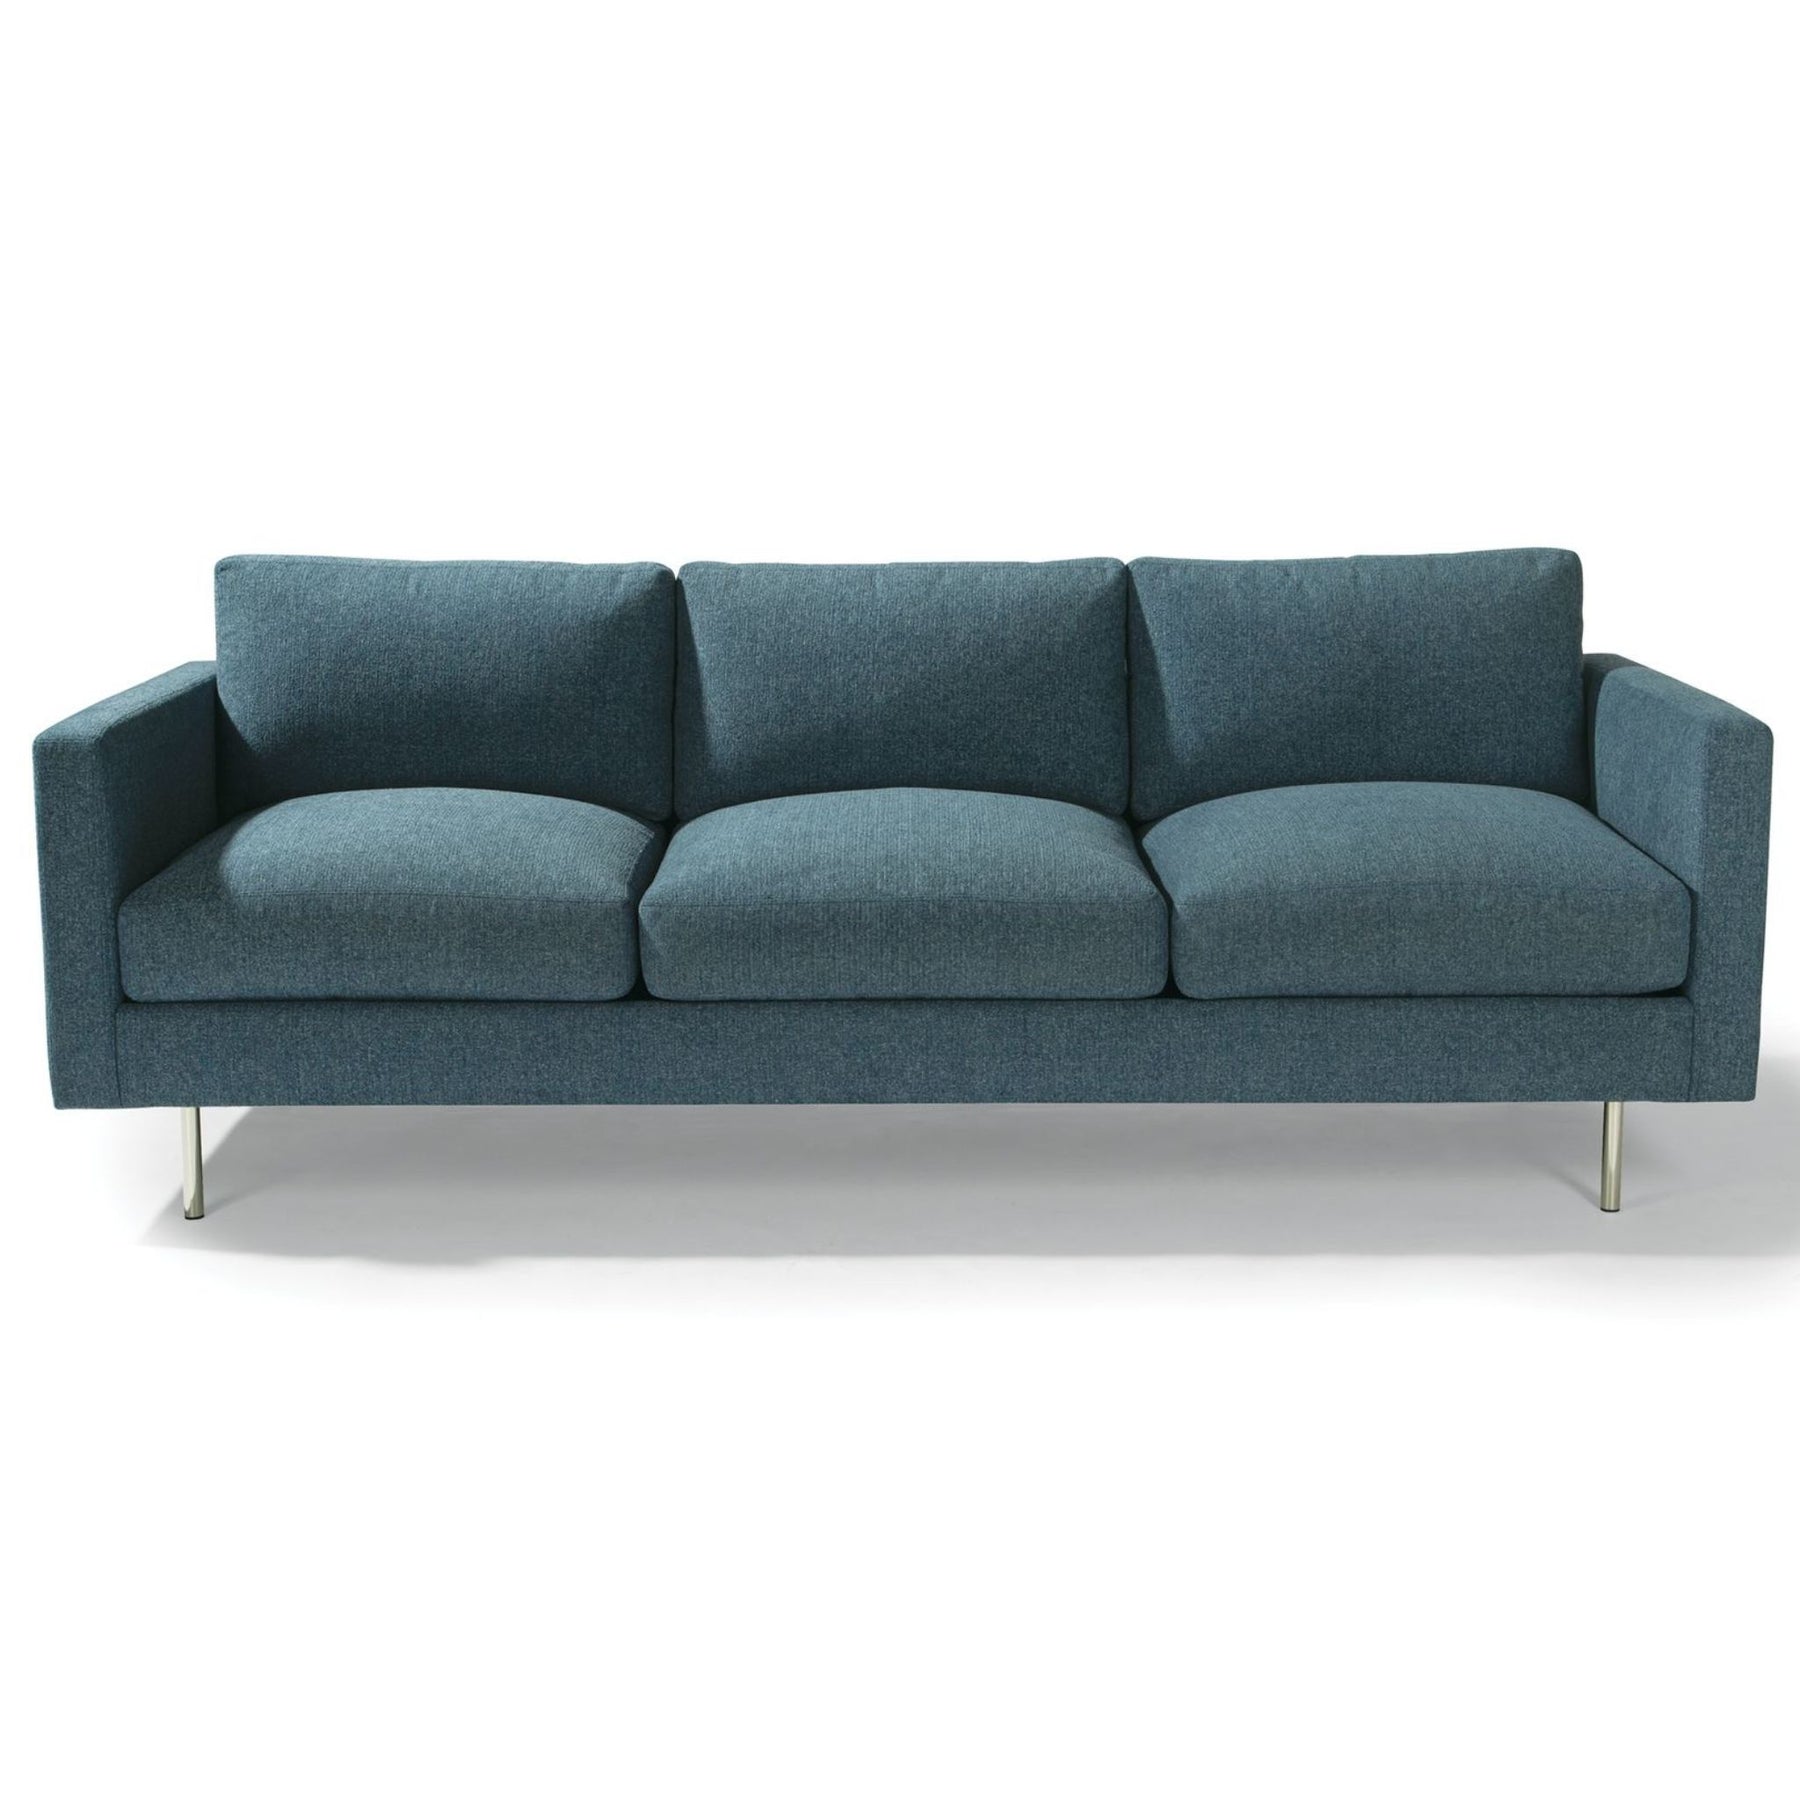 Thayer Coggin Milo Baughman 855 Design Classic Sofa Dark Blue 2259-60 Fabric Polished Stainless Steel Legs